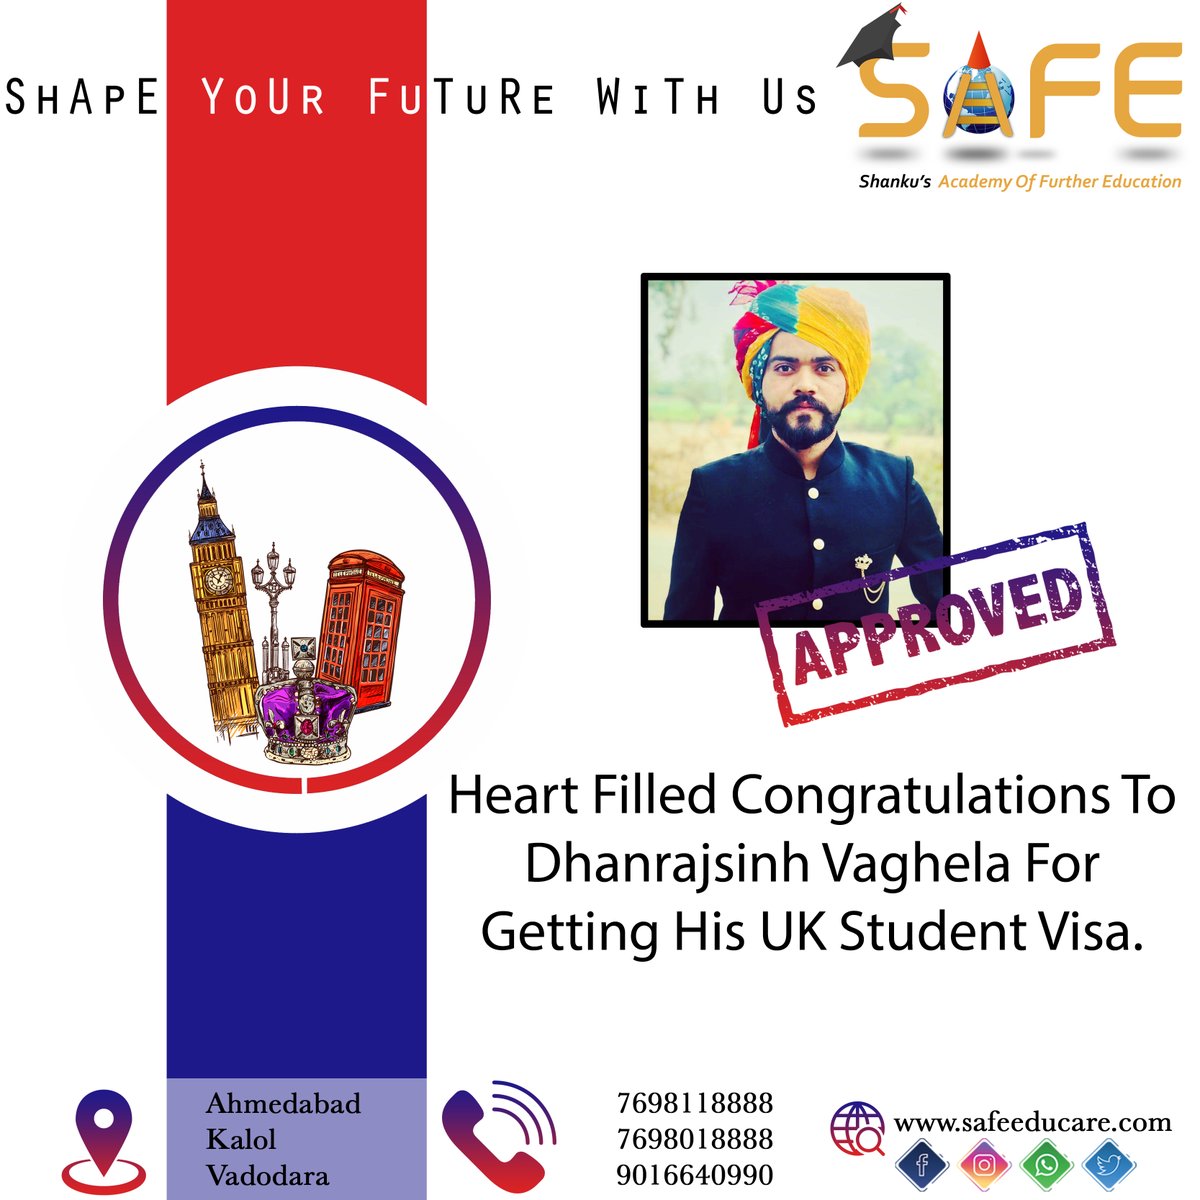 Heart filled congratulations to Dhanrajsinh Vaghela for getting his UK Student Visa.

#uk #visa #visaprocess #travelaboard #studentvisa #workandstudy #ielts #settleabroad #studyabroad #internationaltrip